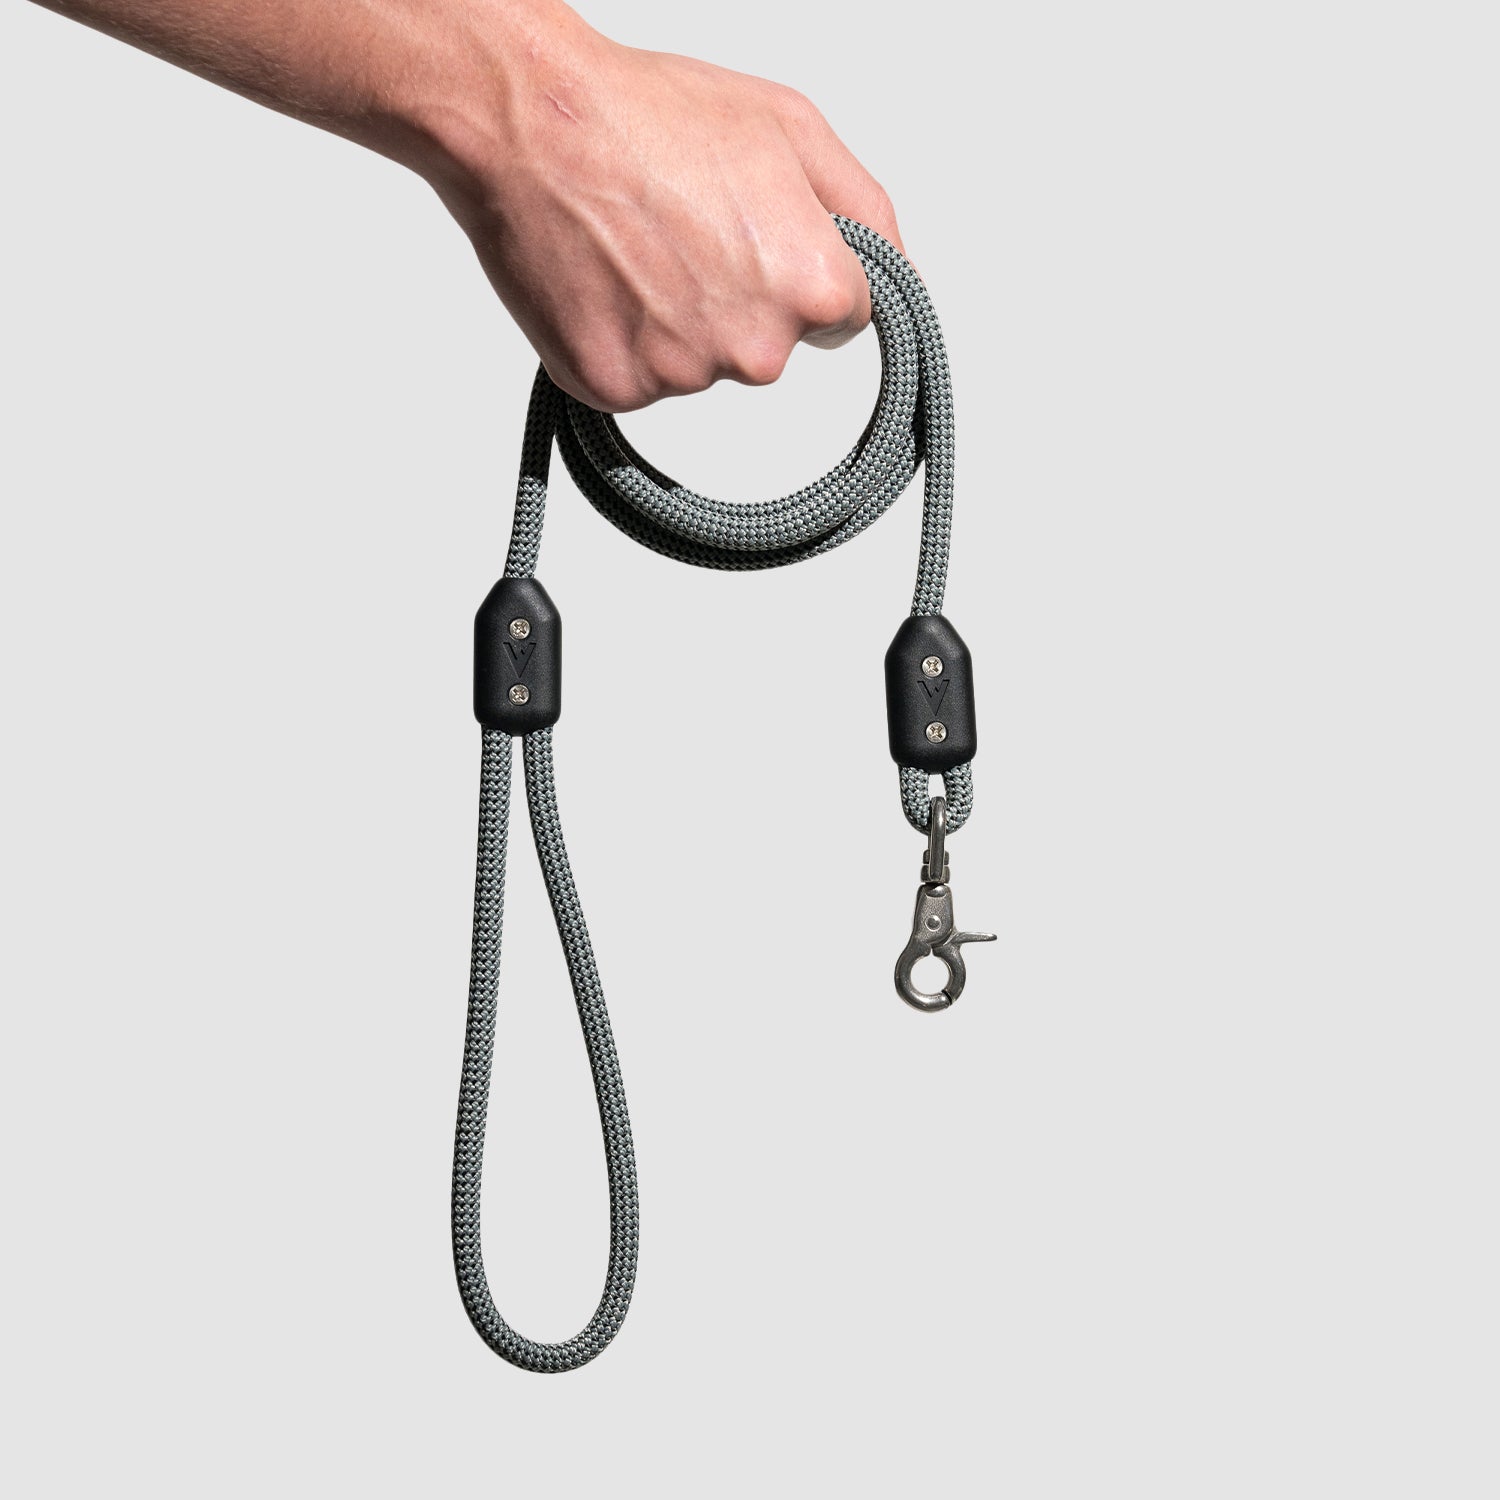 atlas pet company lifetime leash climbing rope lifetime warranty dog leash --silver